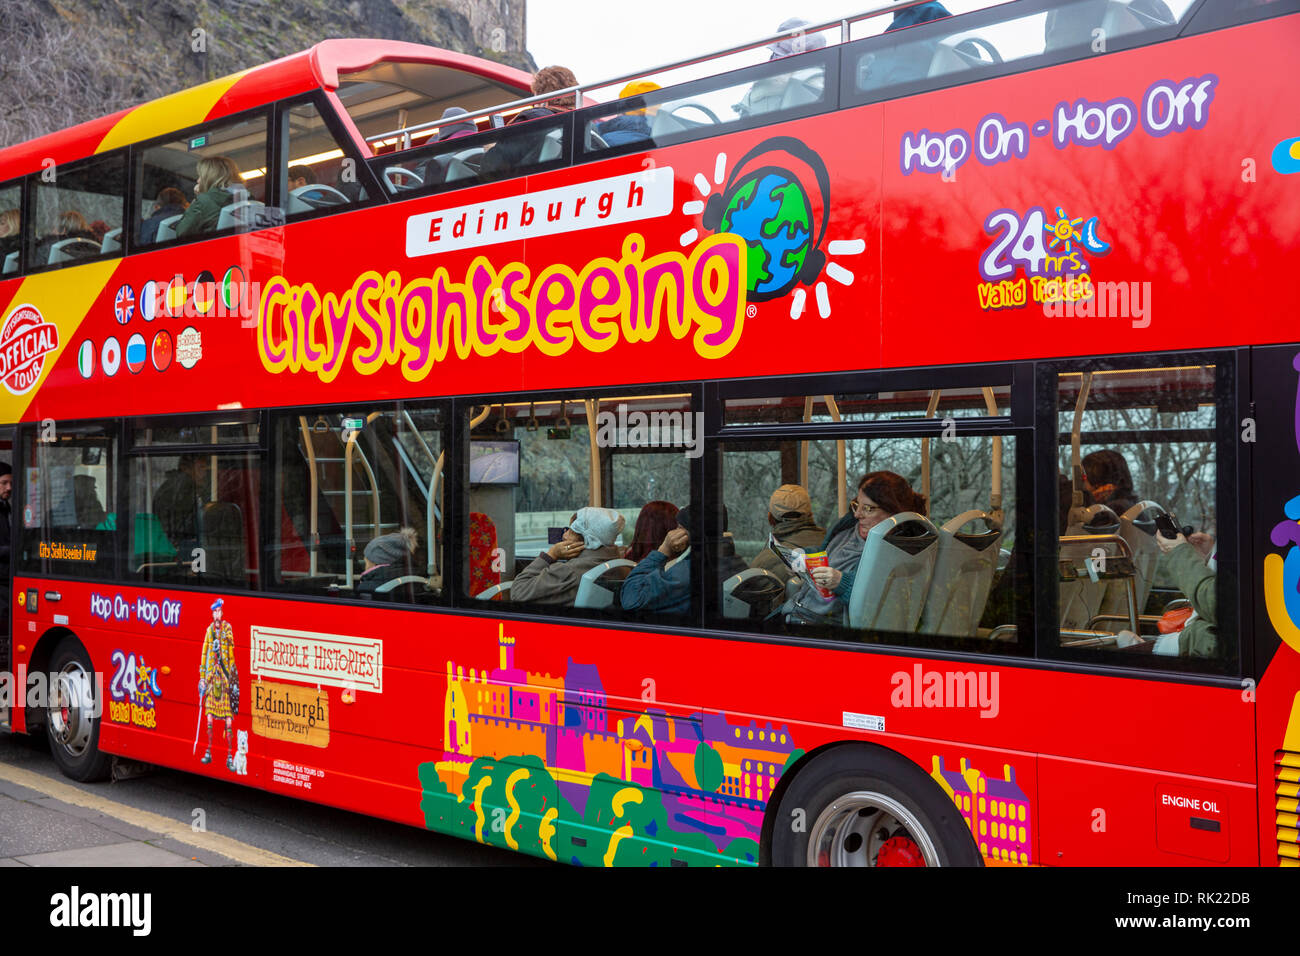 City sightseeing tour bus in Edinburgh city centre,Scotland,UK Stock Photo